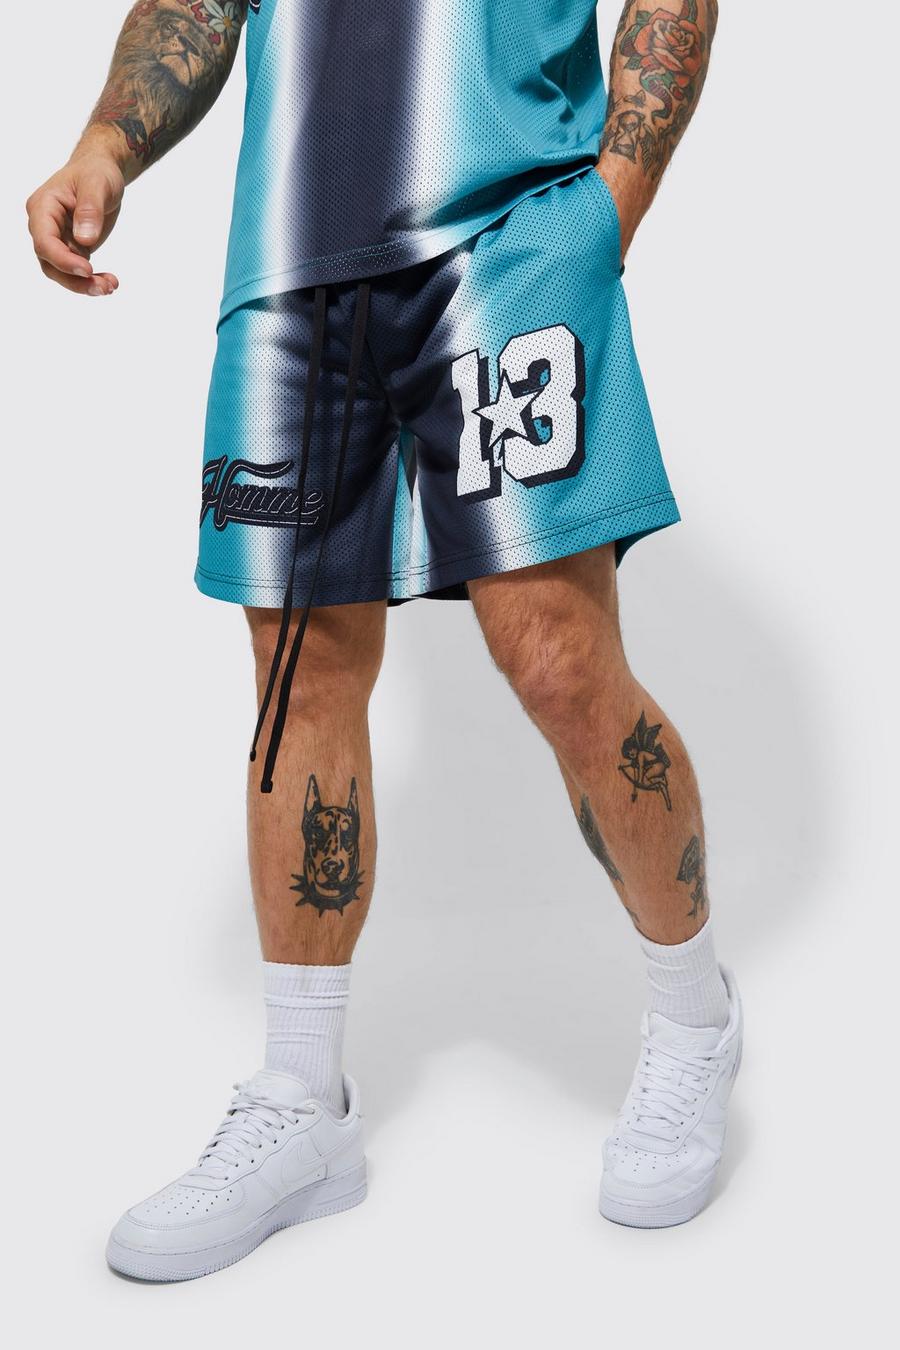 Pantalón corto de baloncesto de malla con estampado Homme en degradado, Teal gerde